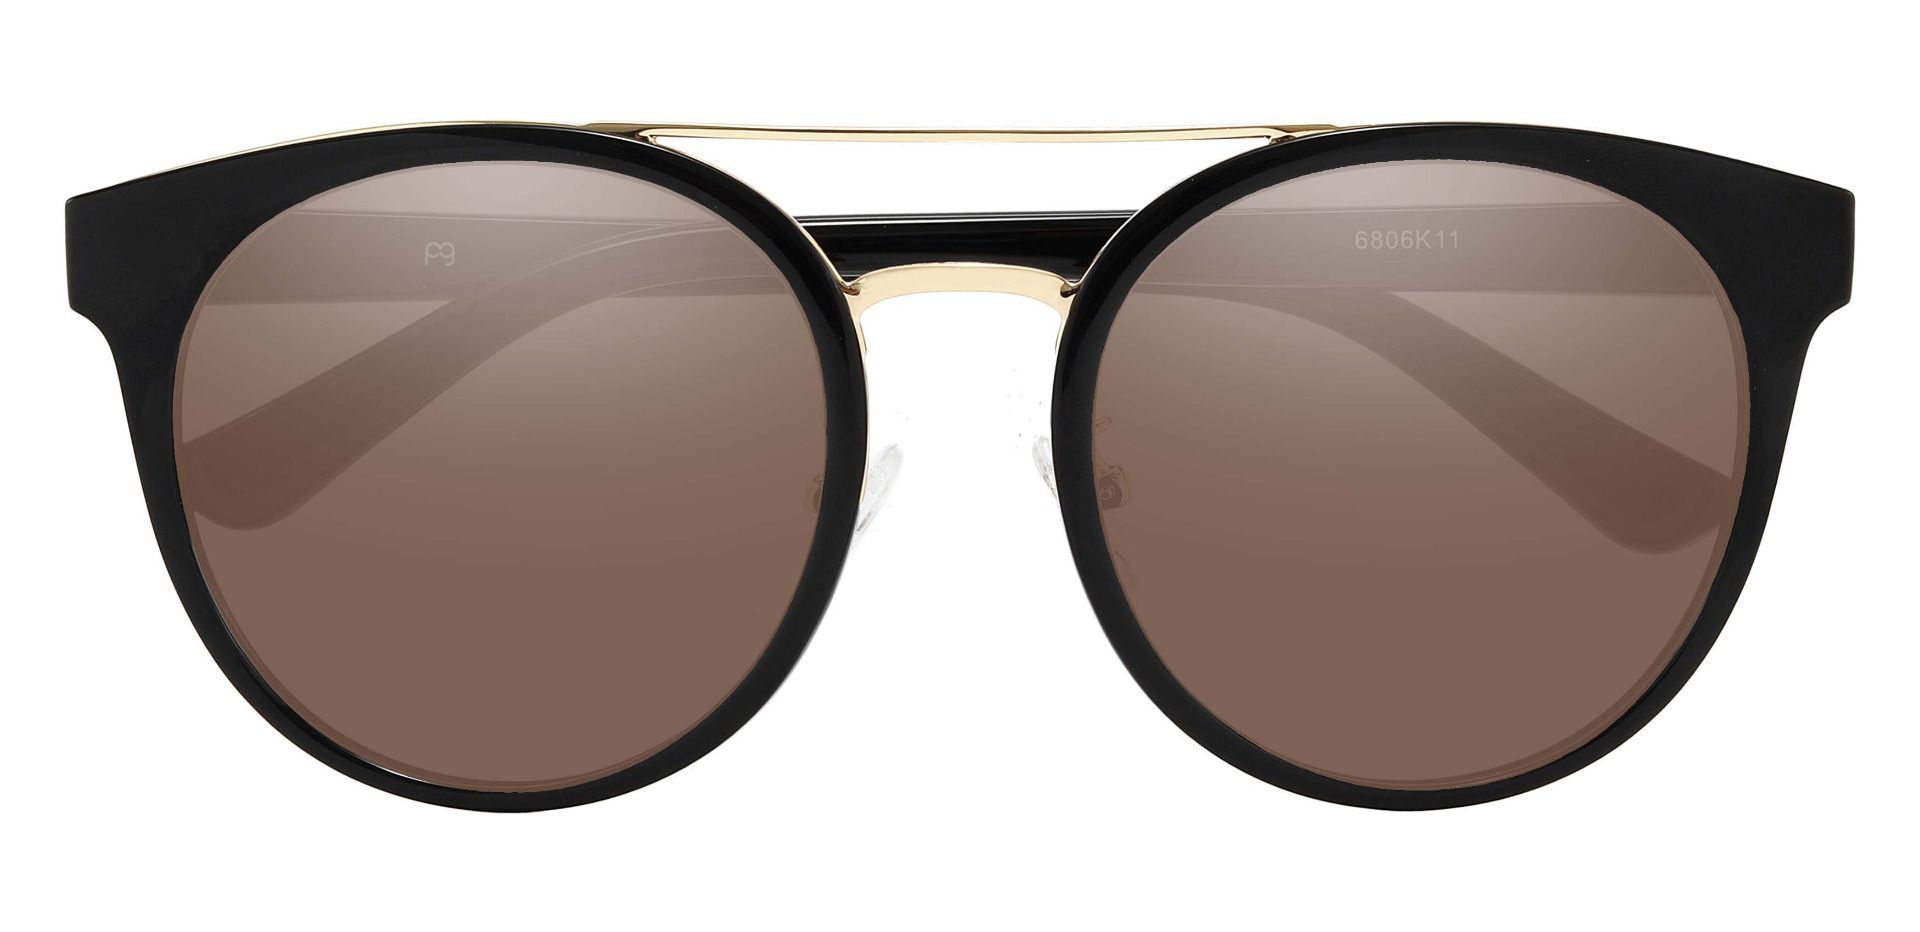 Oasis Aviator Prescription Sunglasses - Black Frame With Brown Lenses